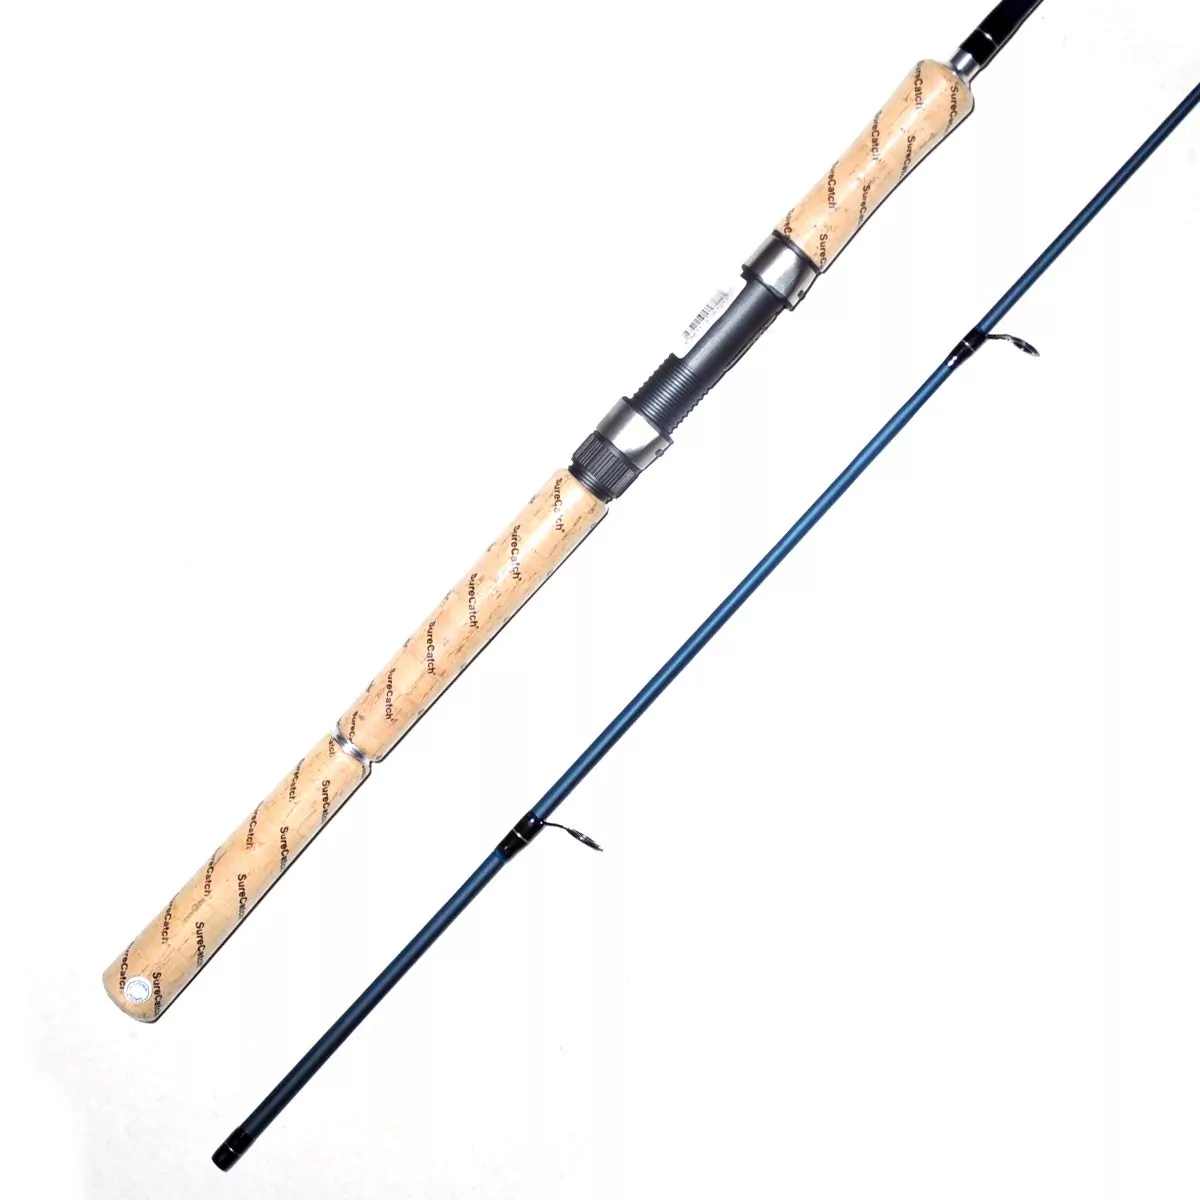 Professional Fishing Gear, Shimano & Surecatch Fishing Rod, Model No:  PKC3603, 12 feet long, with Surecatch SC887 carrying case, Telescopic 3  Section